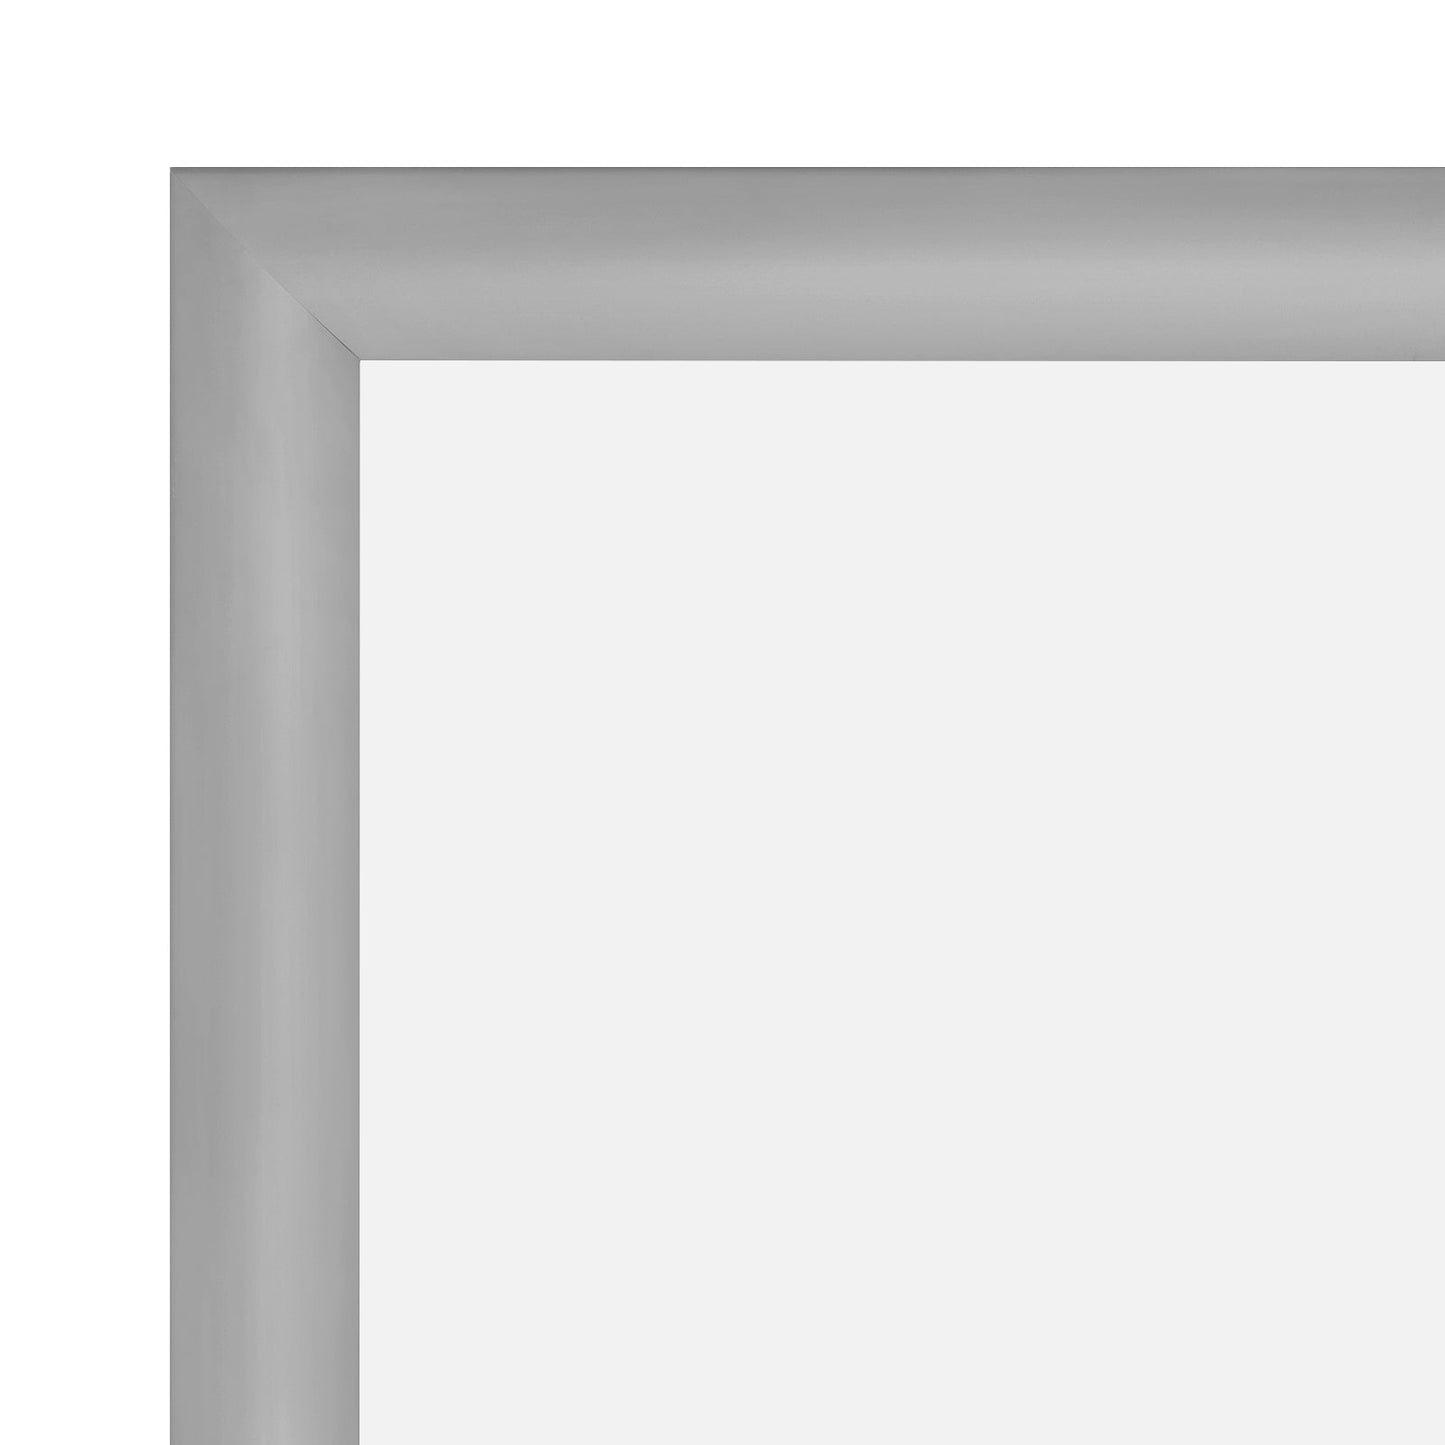 16x22 Silver SnapeZo® Snap Frame - 1.2" Profile